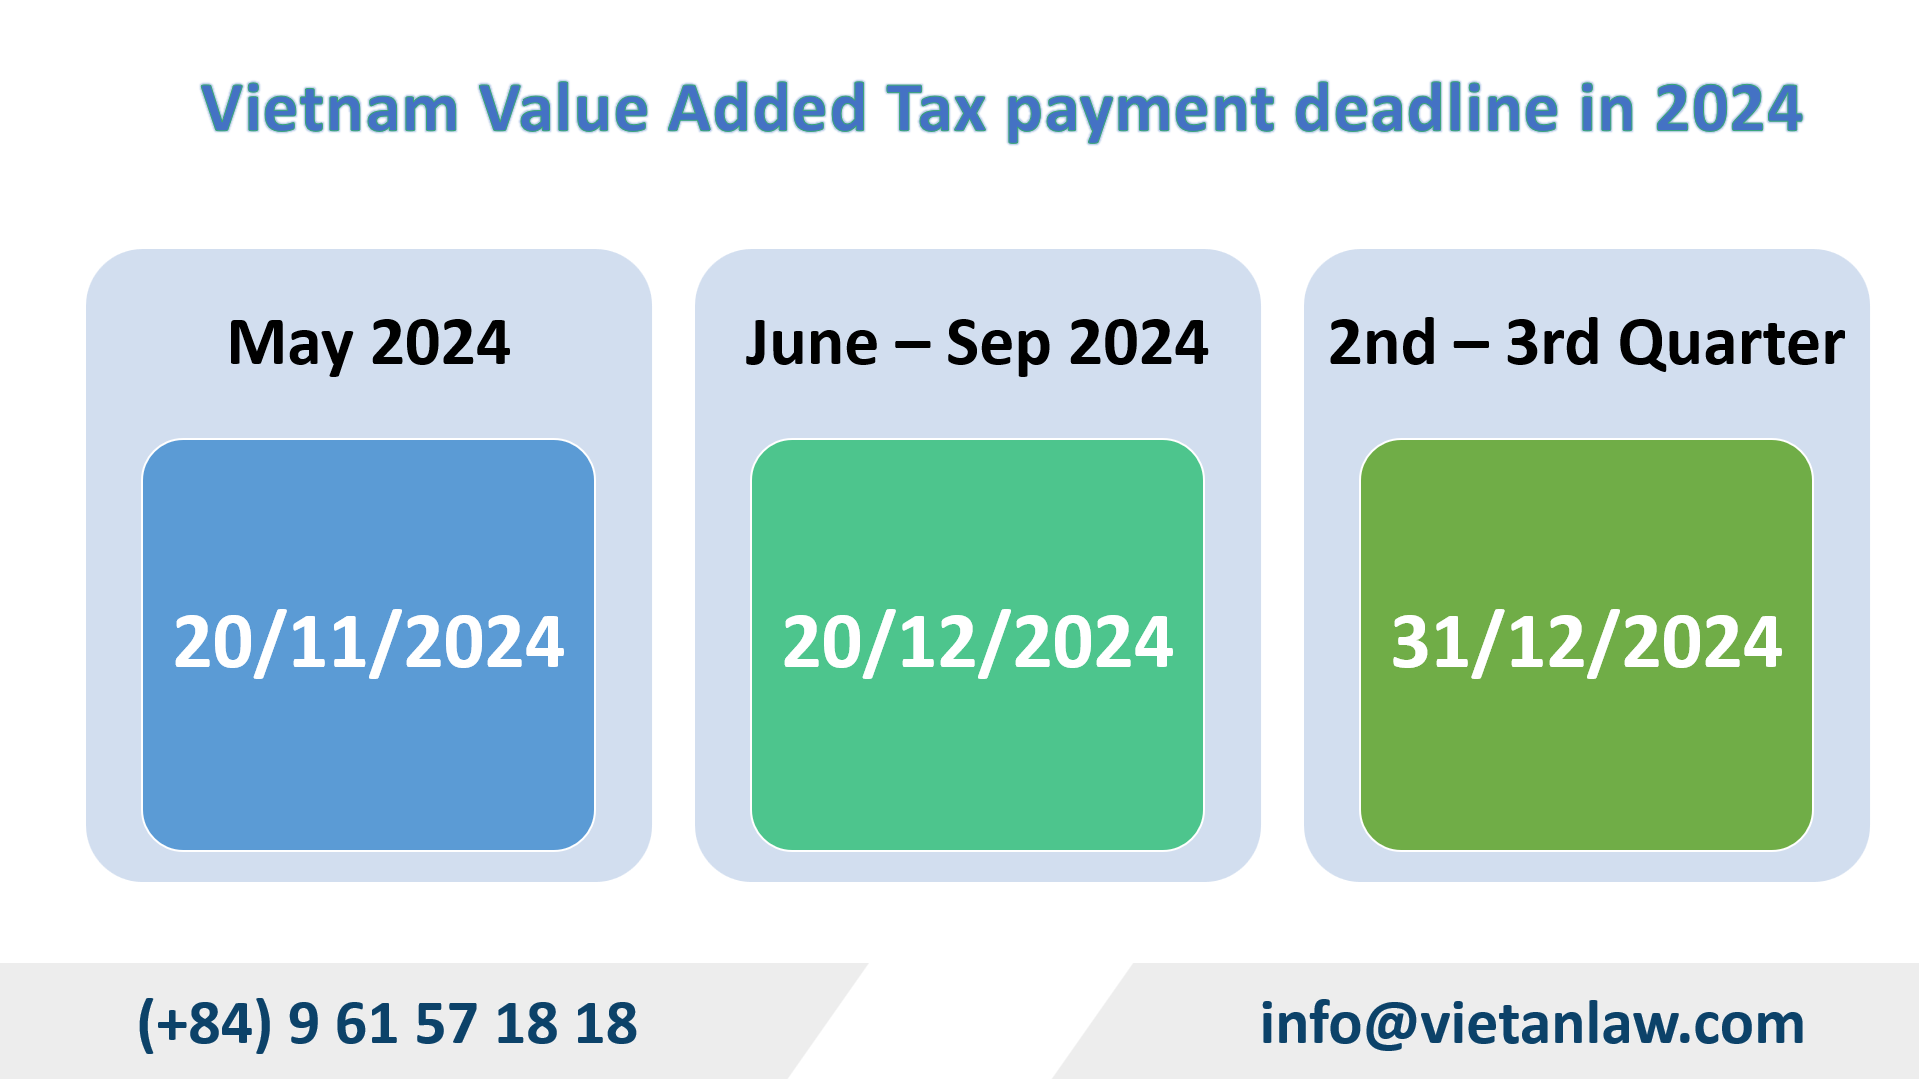 Extending tax deadline for Vietnam company in 2024